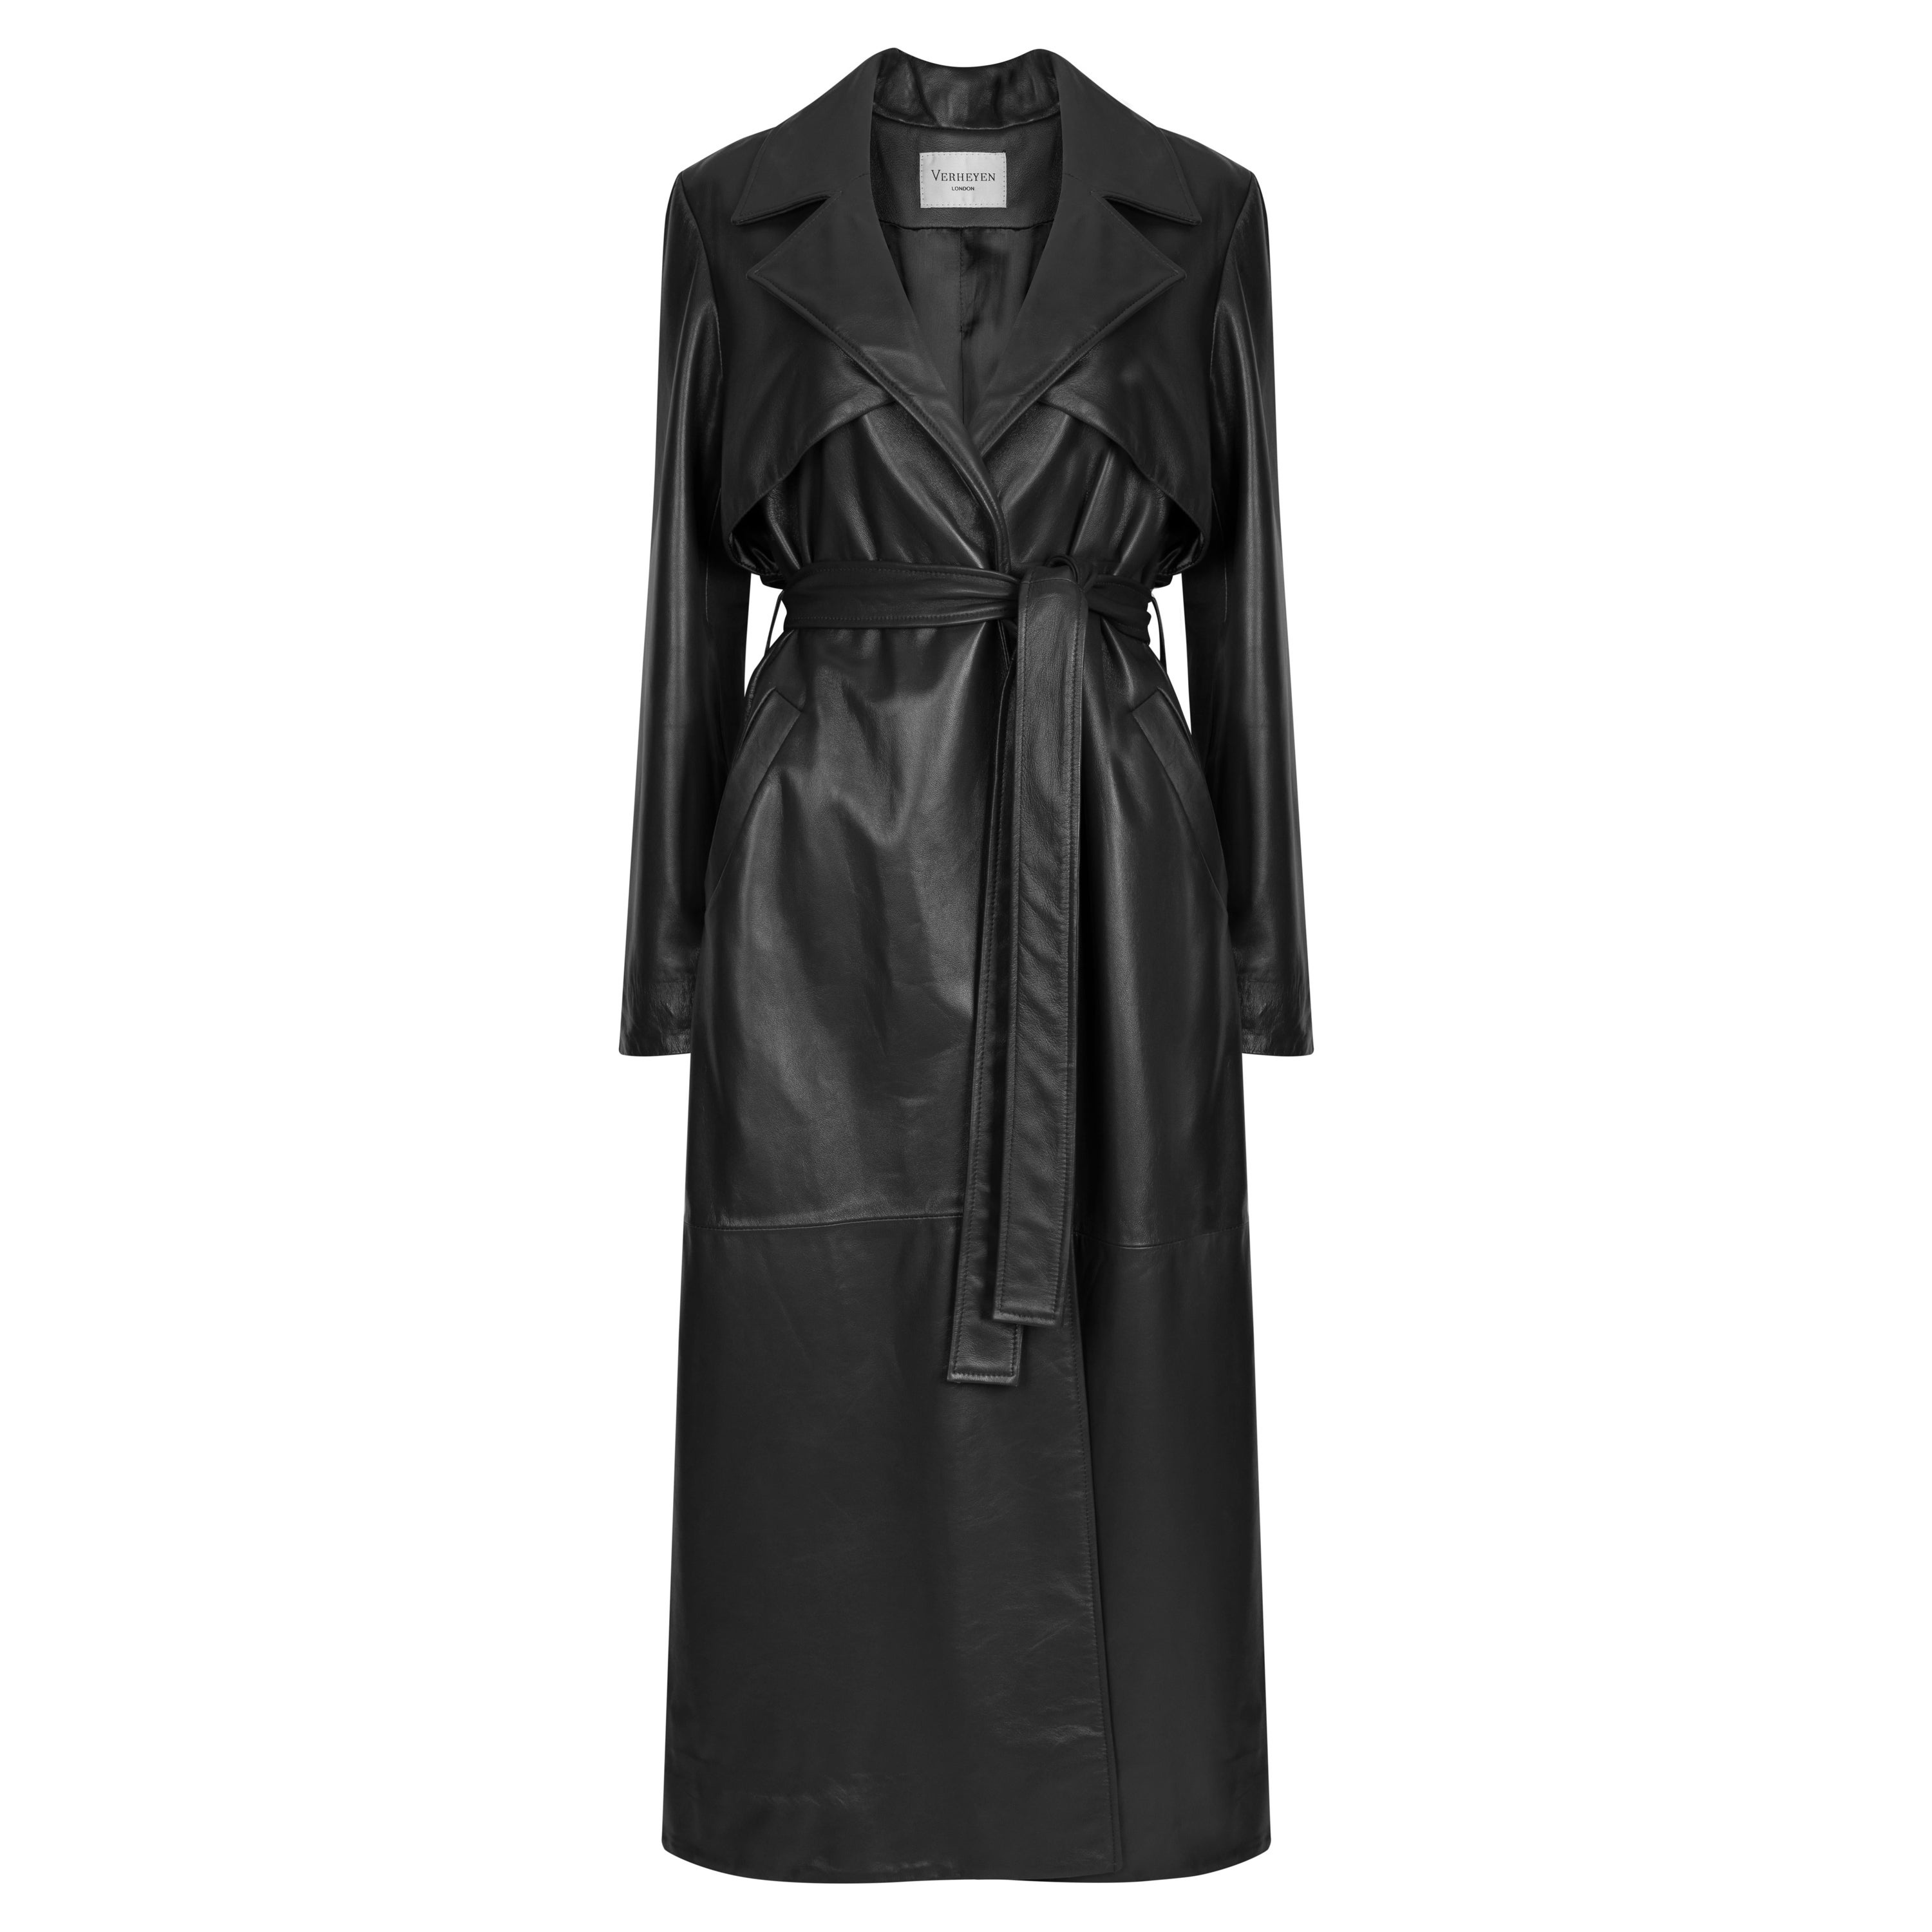 Trench-coat en cuir de Verheyen London, noir  - Taille uk 10 en vente